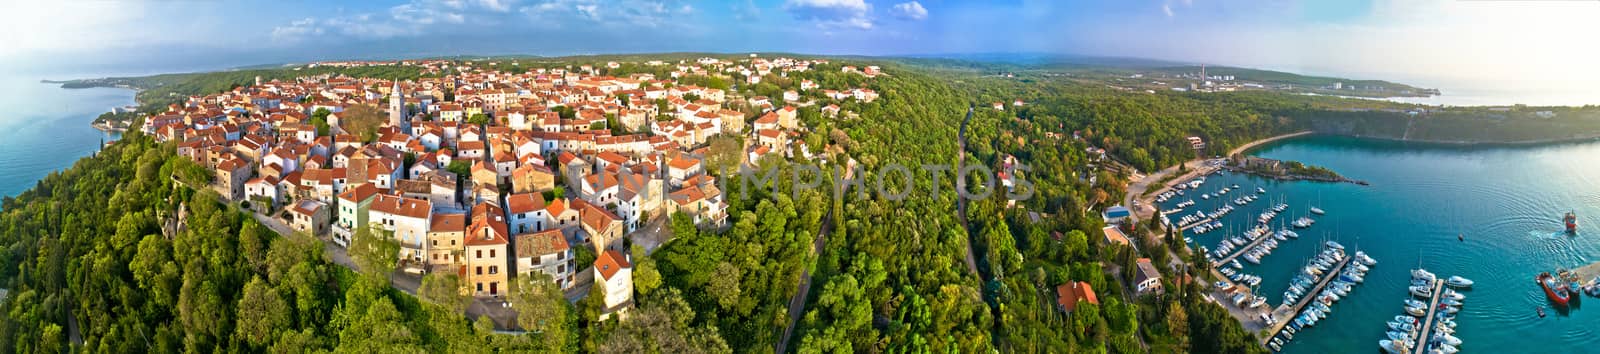 Town of Omisalj on Krk island aerial panorama, Kvarner bay of Croatia